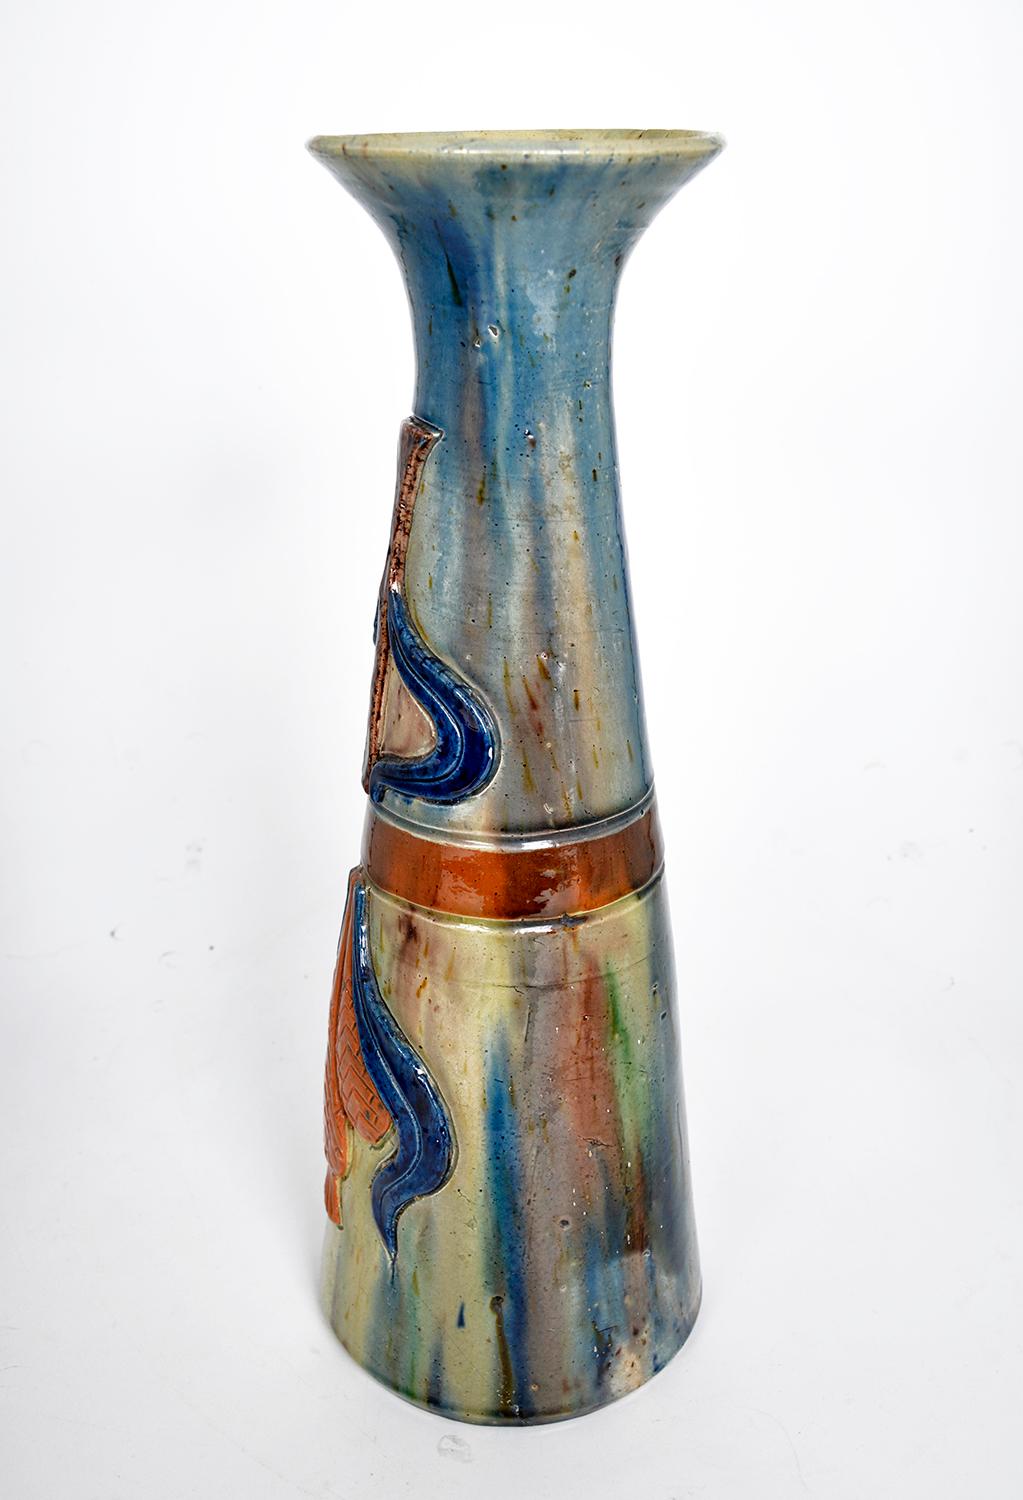 Belgian Flemish Studio Pottery Art Nouveau Drip Glazed Earthenware Vase 1900s Folk Art For Sale